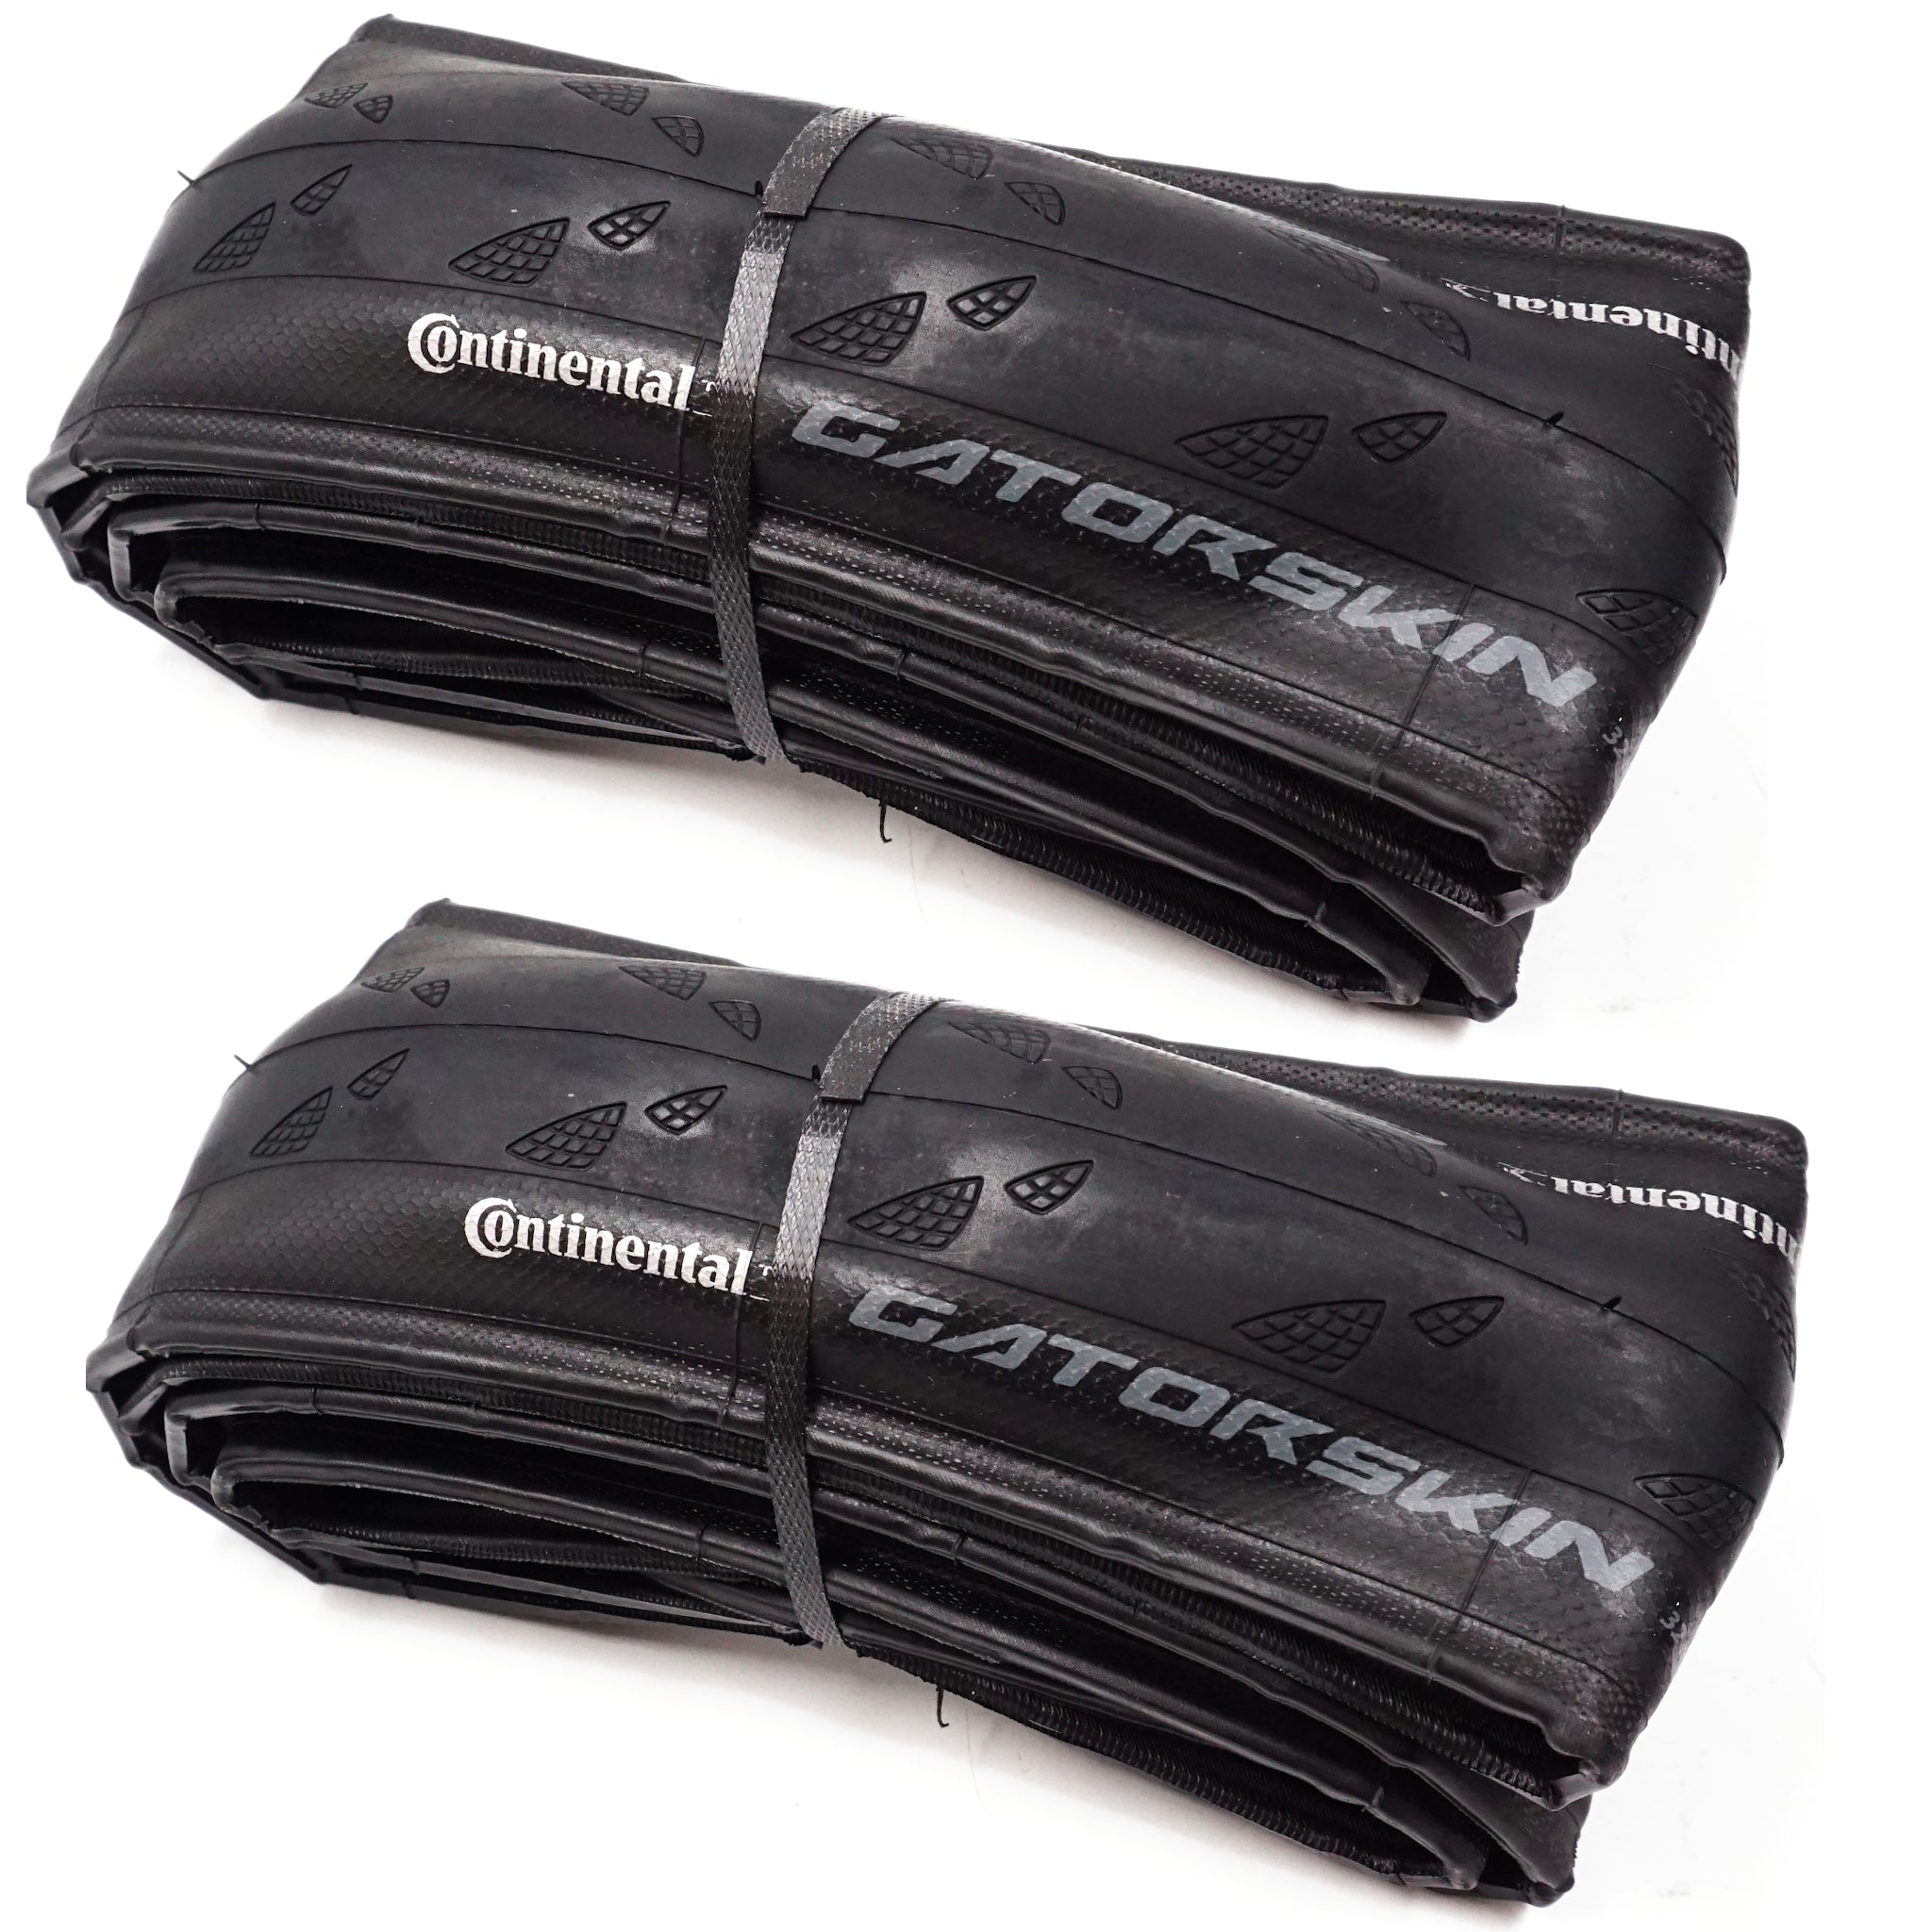 Continental Gatorskin Folding Tire - Special Black Edition